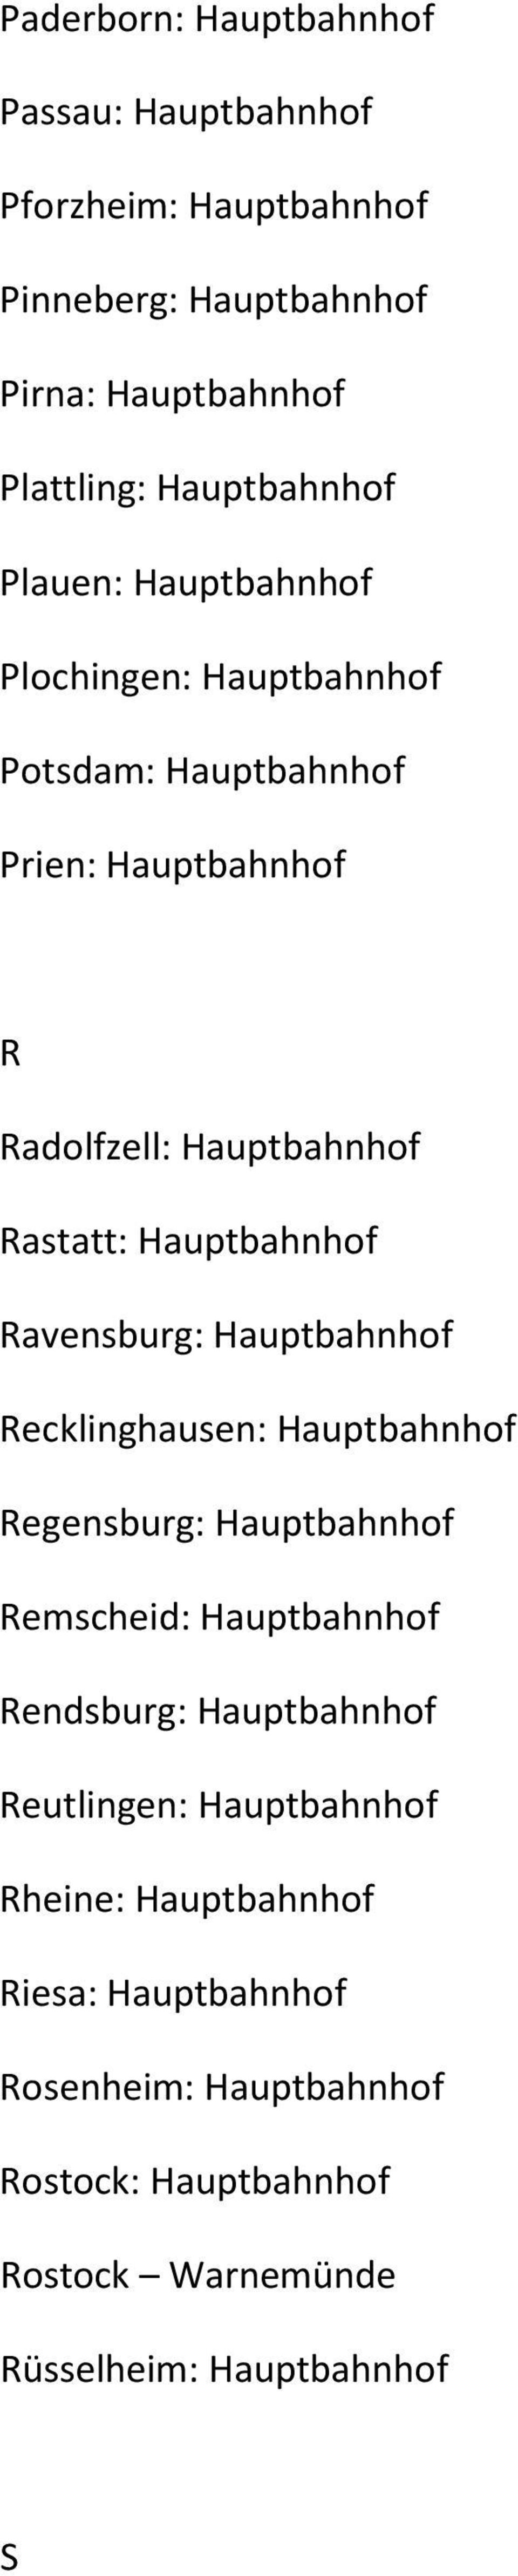 Ravensburg: Hauptbahnhof Recklinghausen: Hauptbahnhof Regensburg: Hauptbahnhof Remscheid: Hauptbahnhof Rendsburg: Hauptbahnhof Reutlingen: